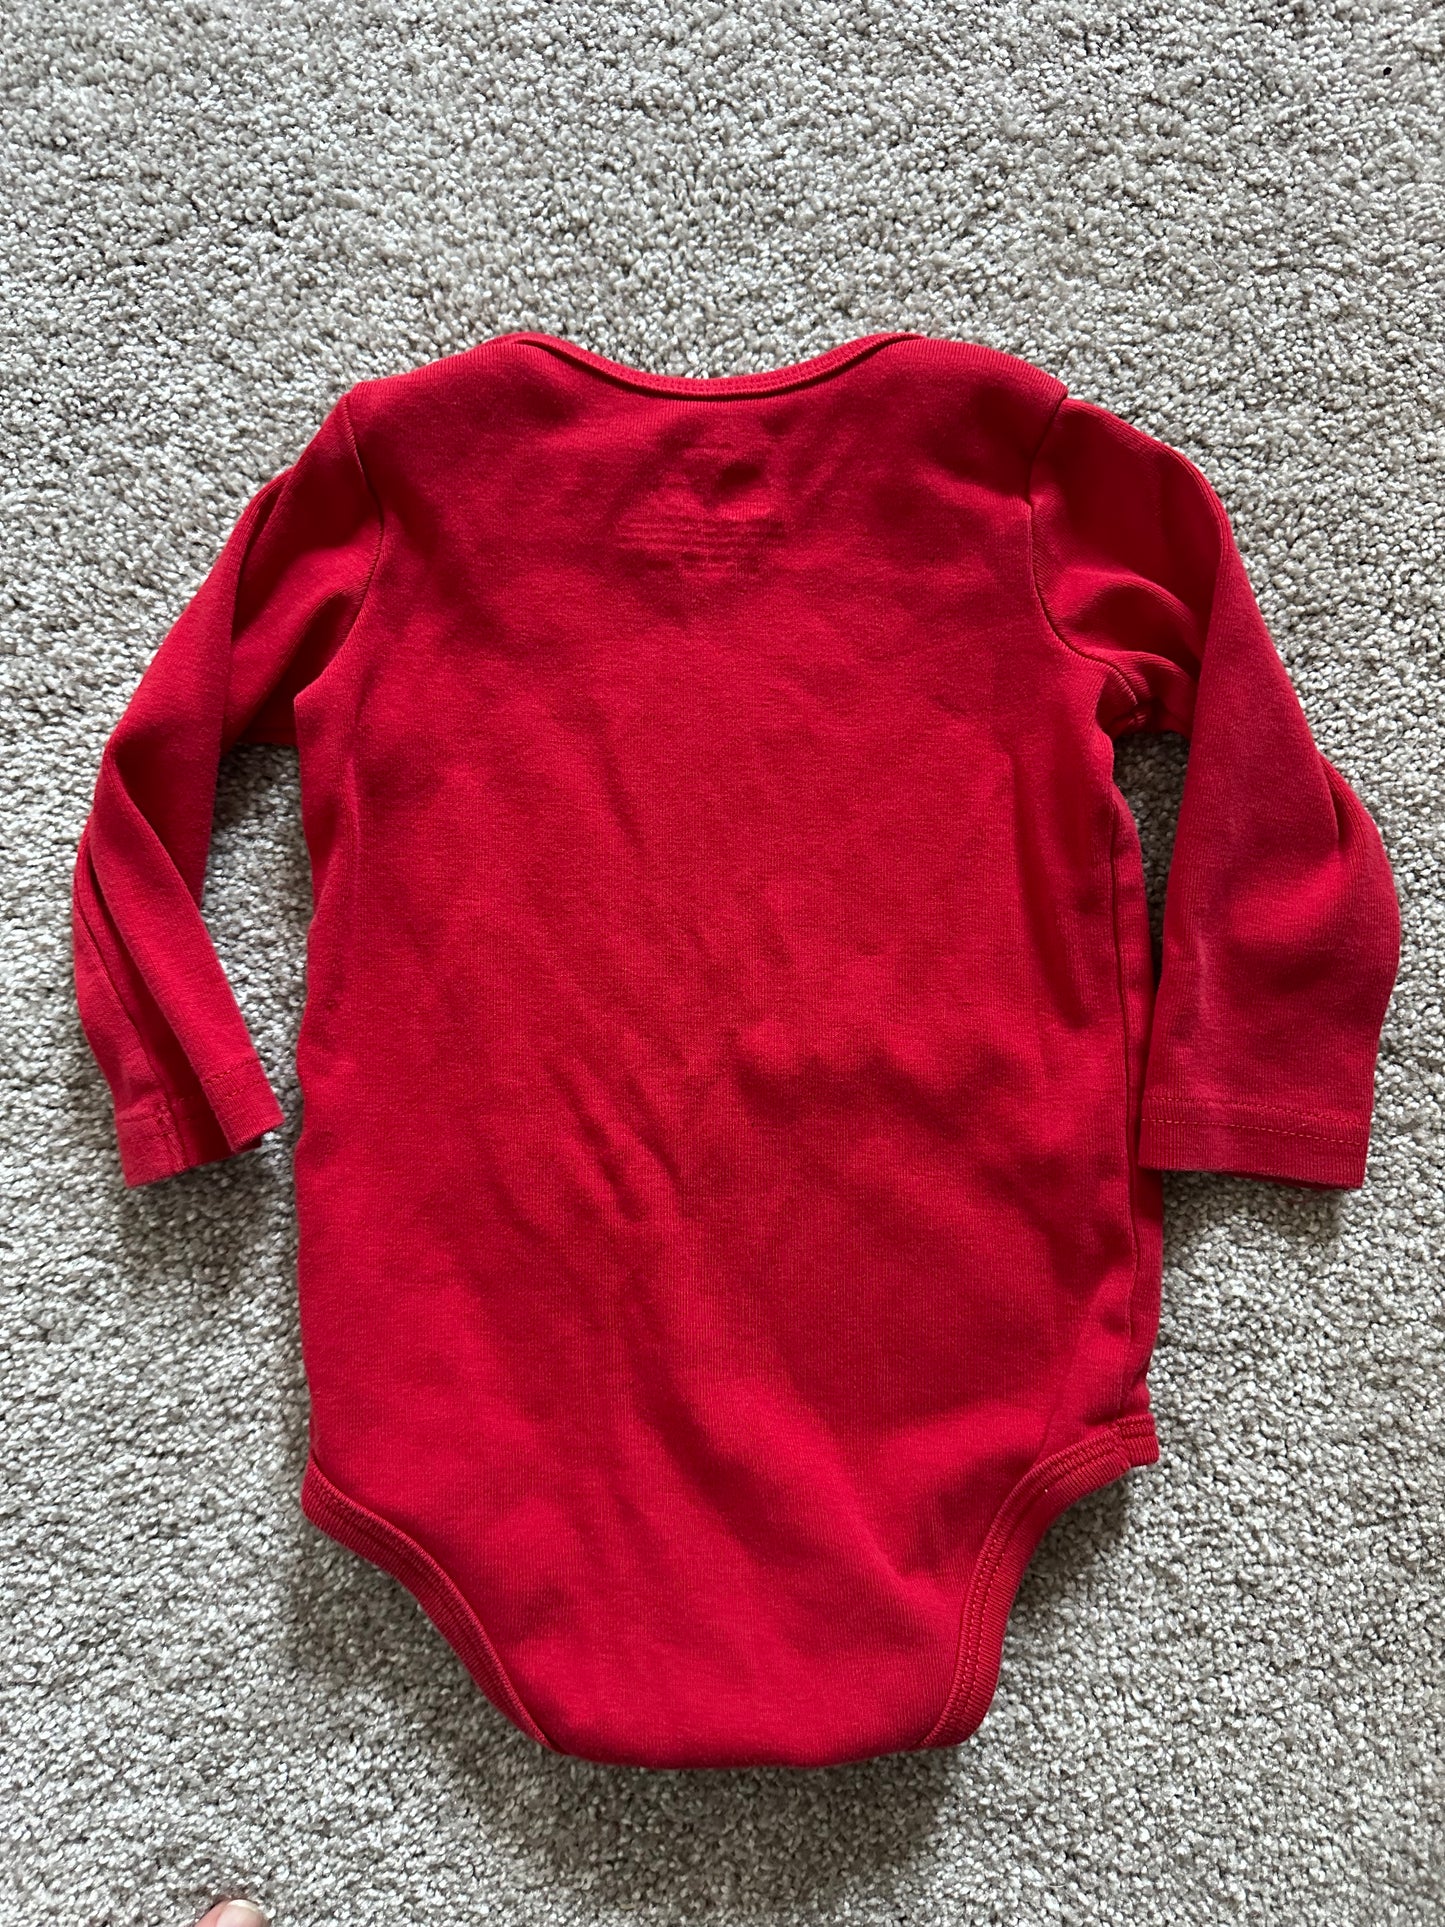 Primary | long-sleeve bodysuit bundle (4) | gender neutral | multi-color | 6-9 months